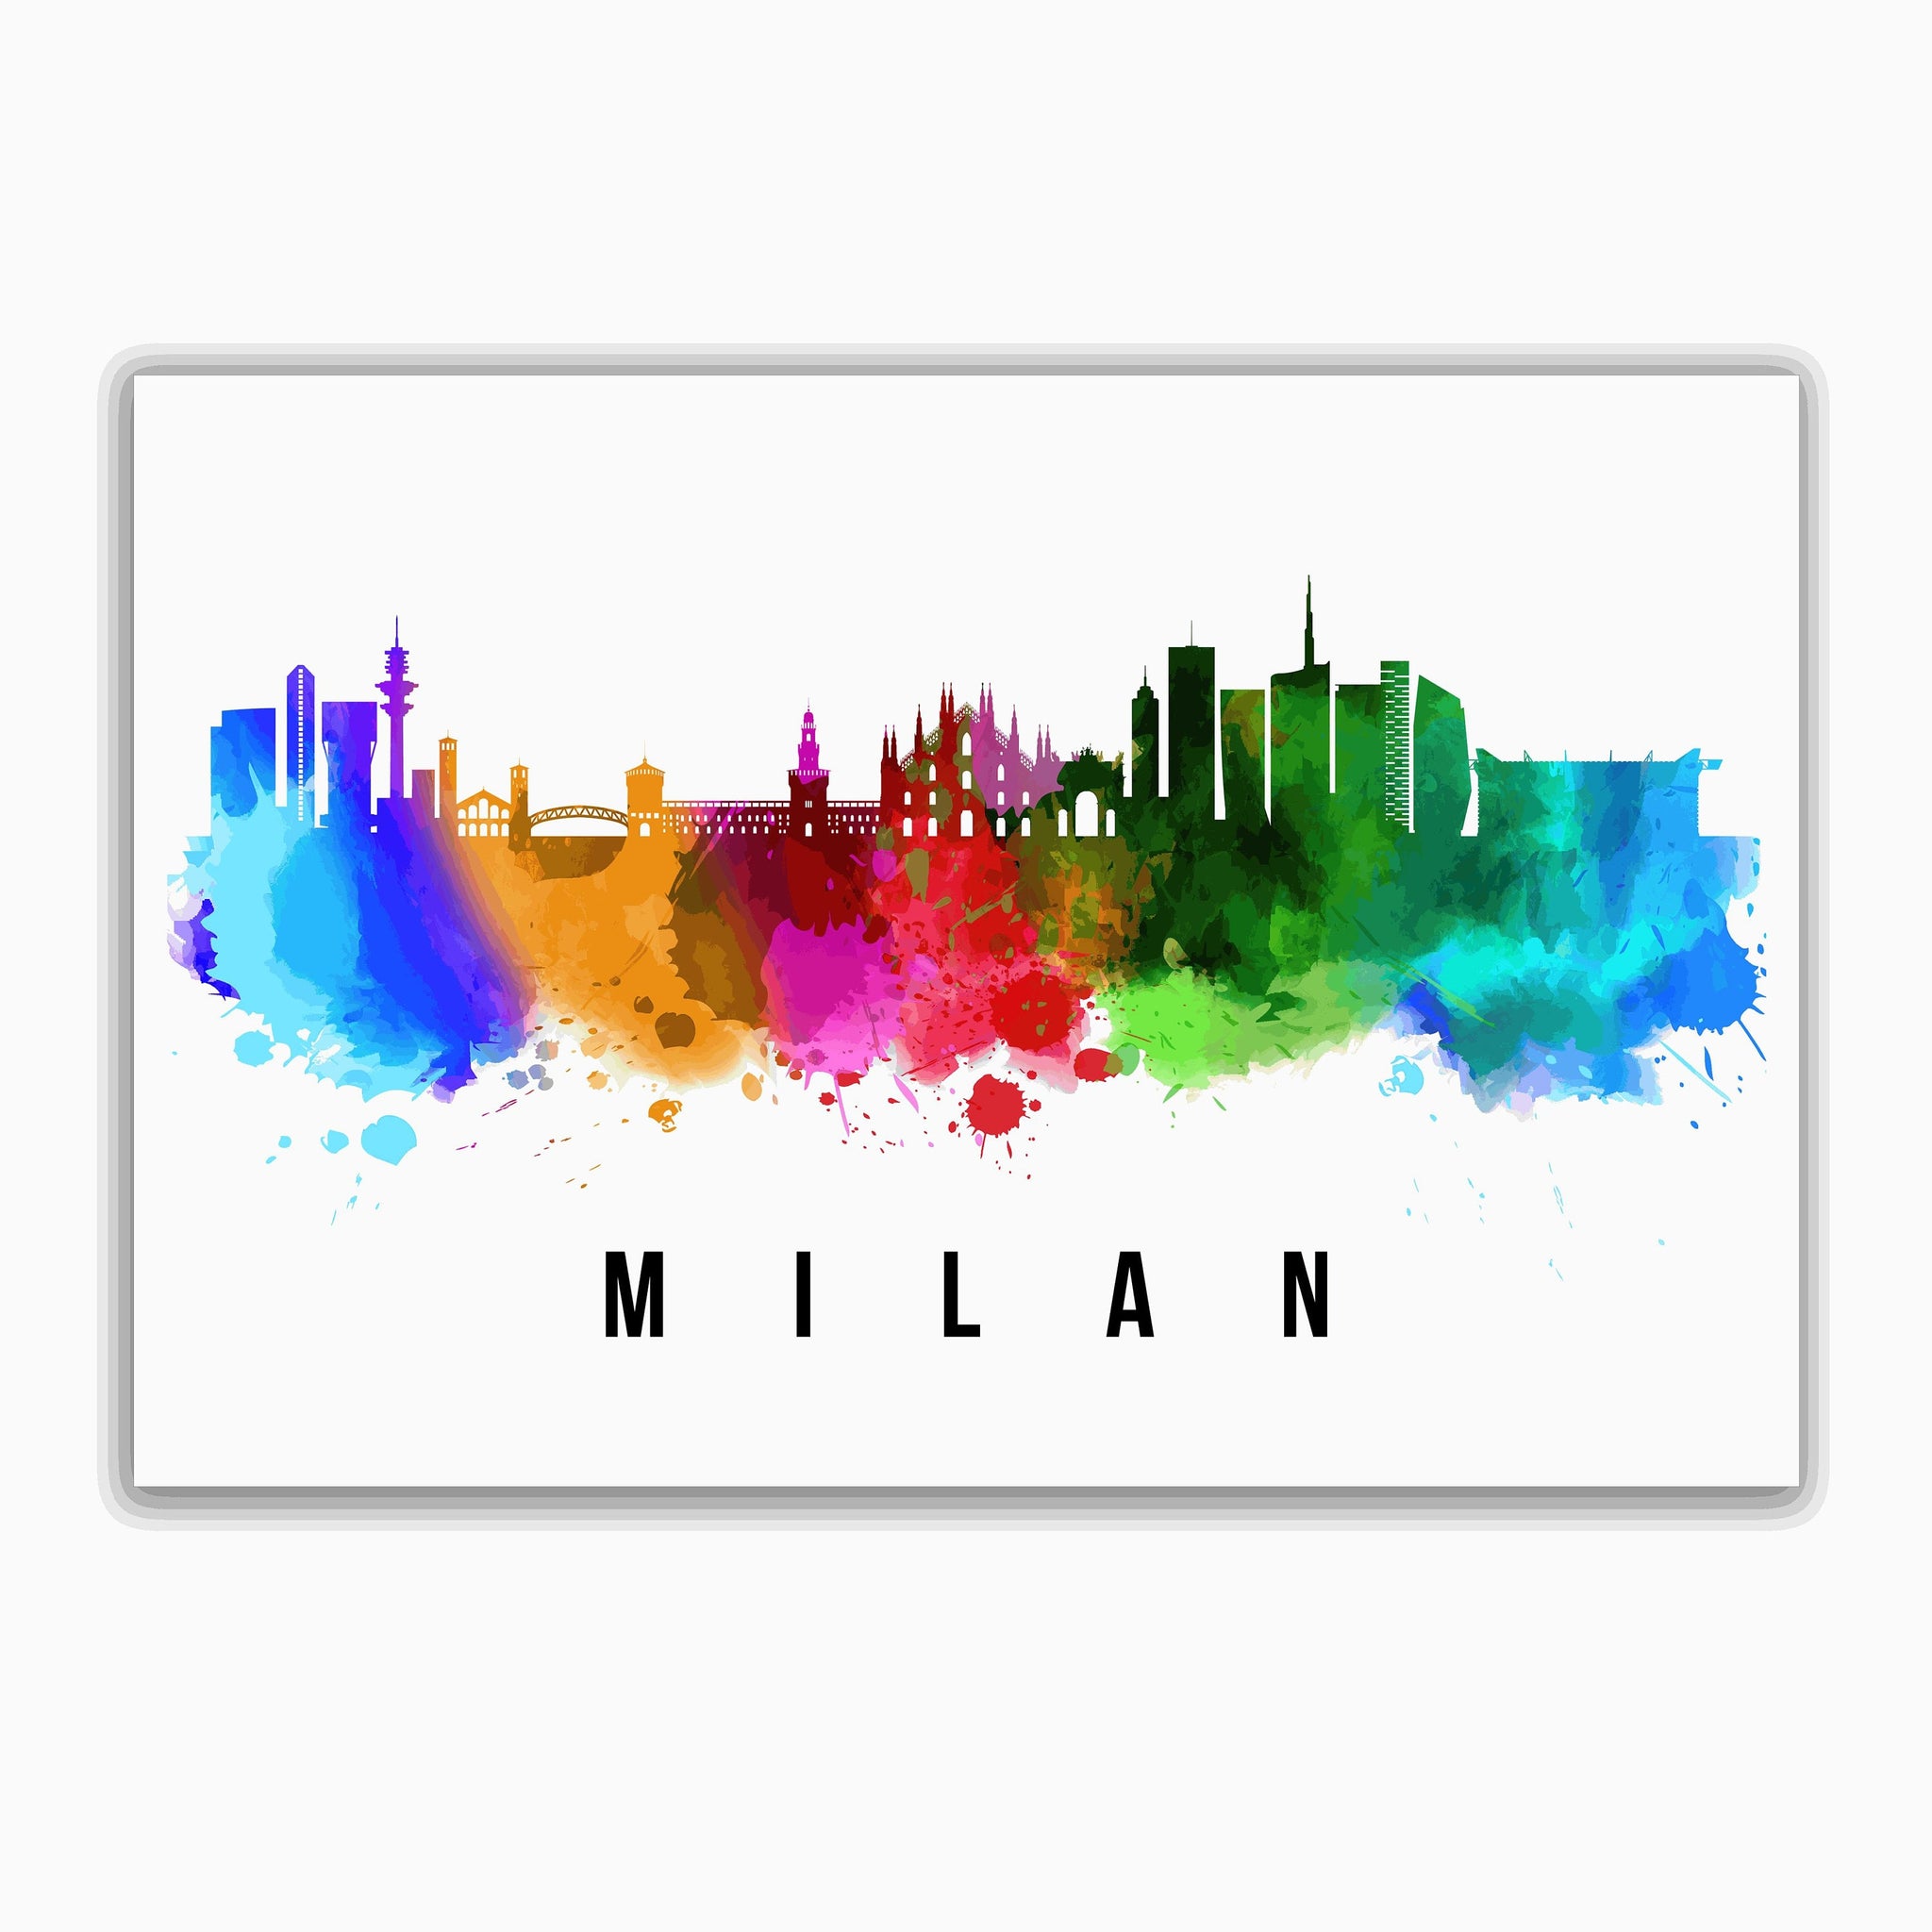 MILAN - ITALY Poster, Skyline Poster Cityscape and Landmark Milan City Illustration Home Wall Art, Office Decor